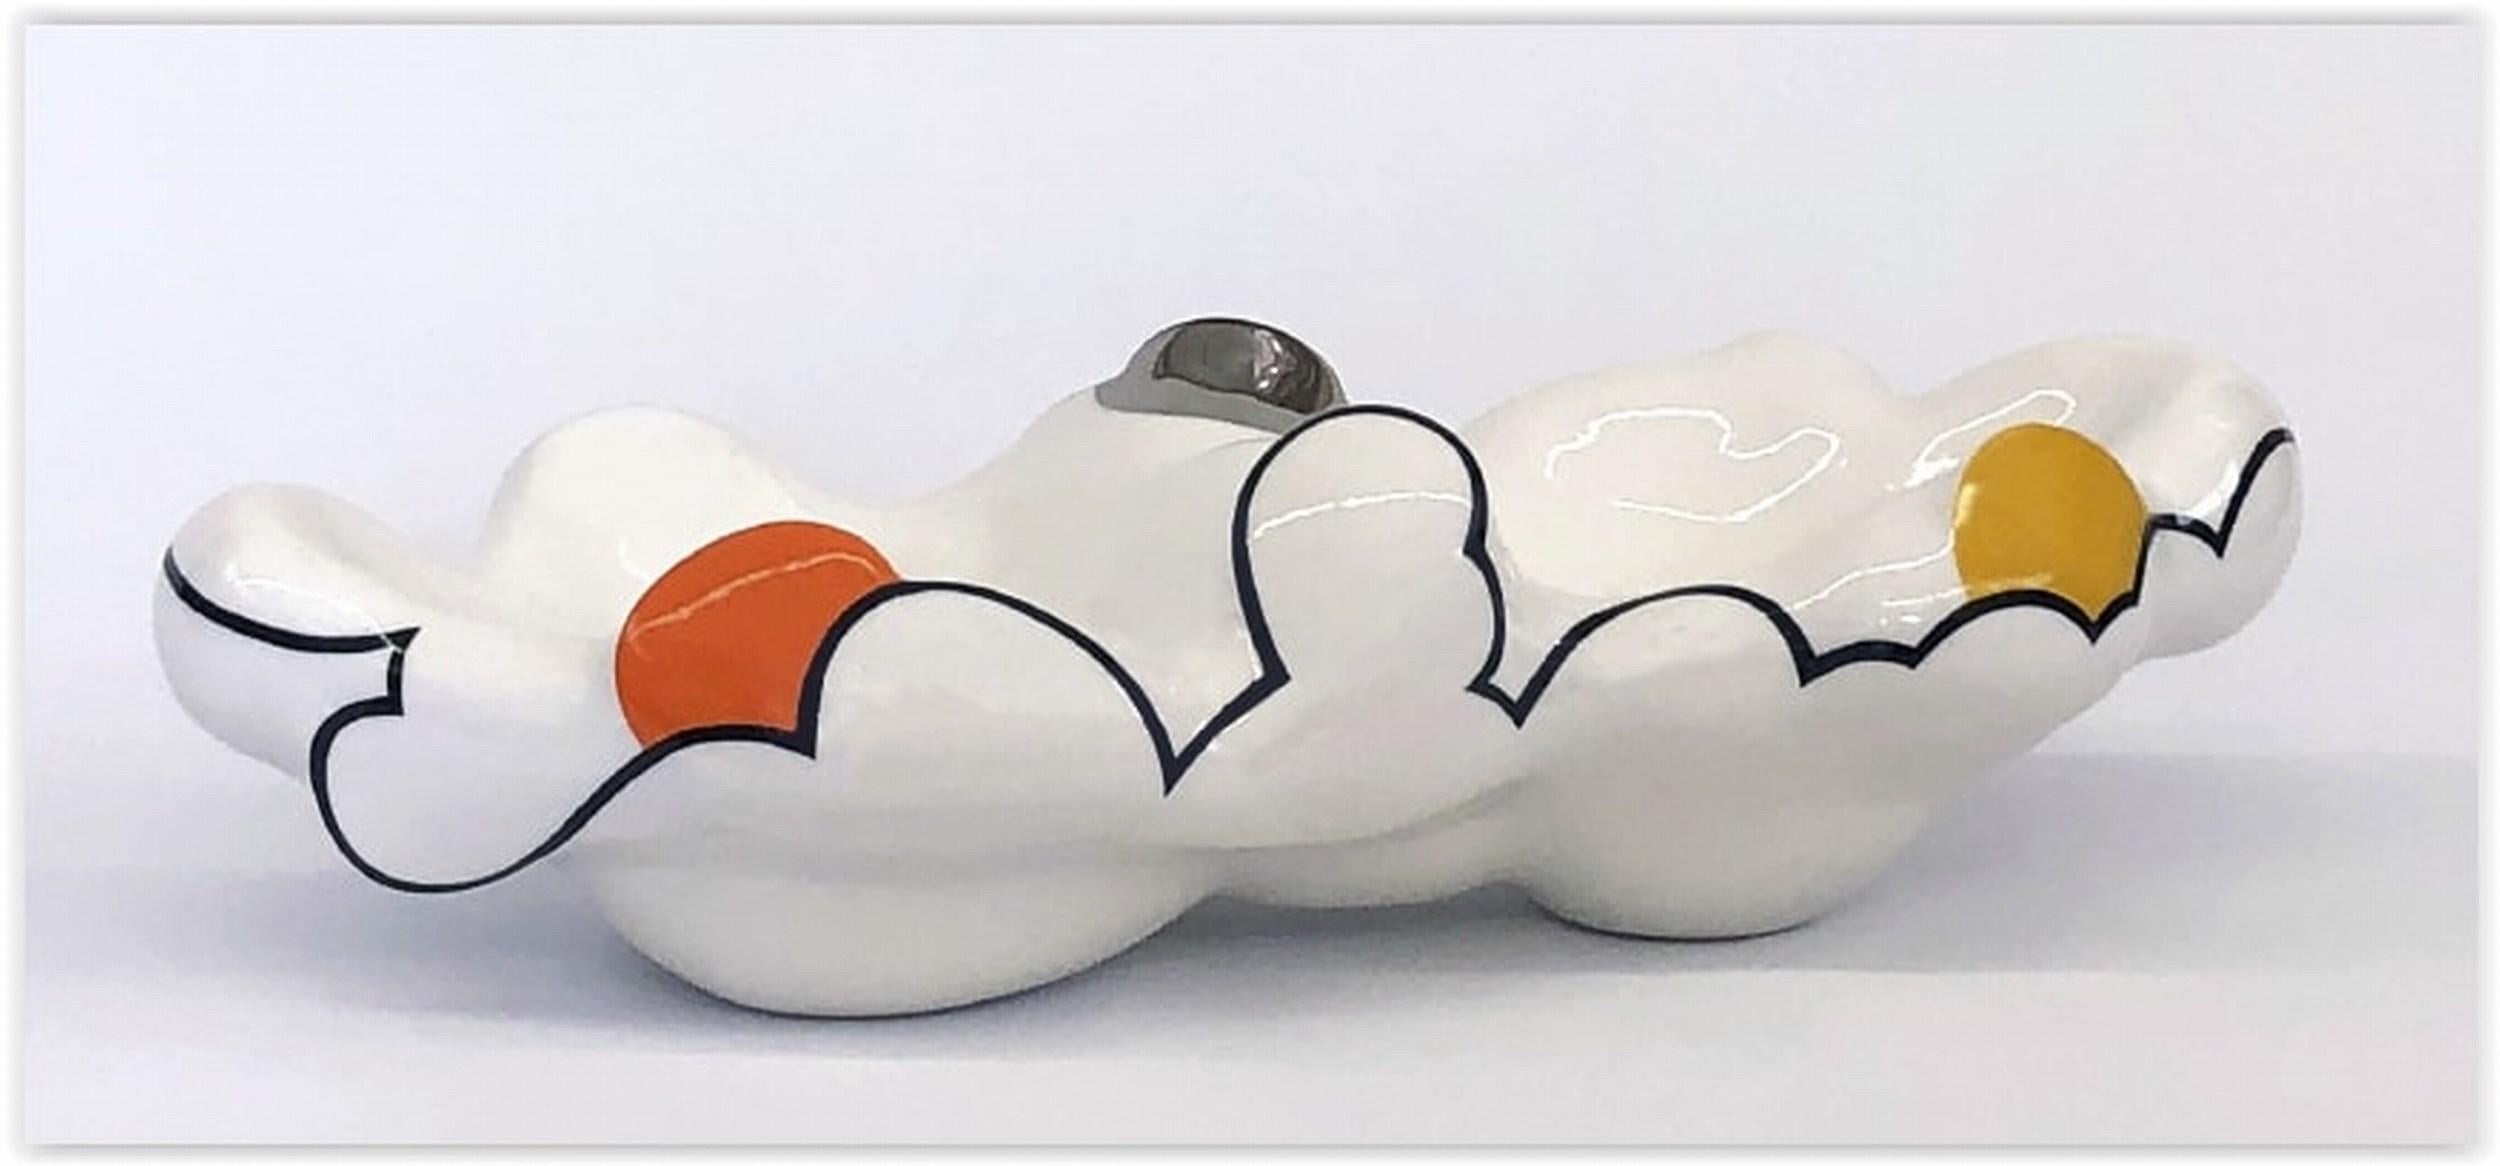 Cloud Bowl - Platinum/Orange/Yellow - Sculpture by Sam Chung